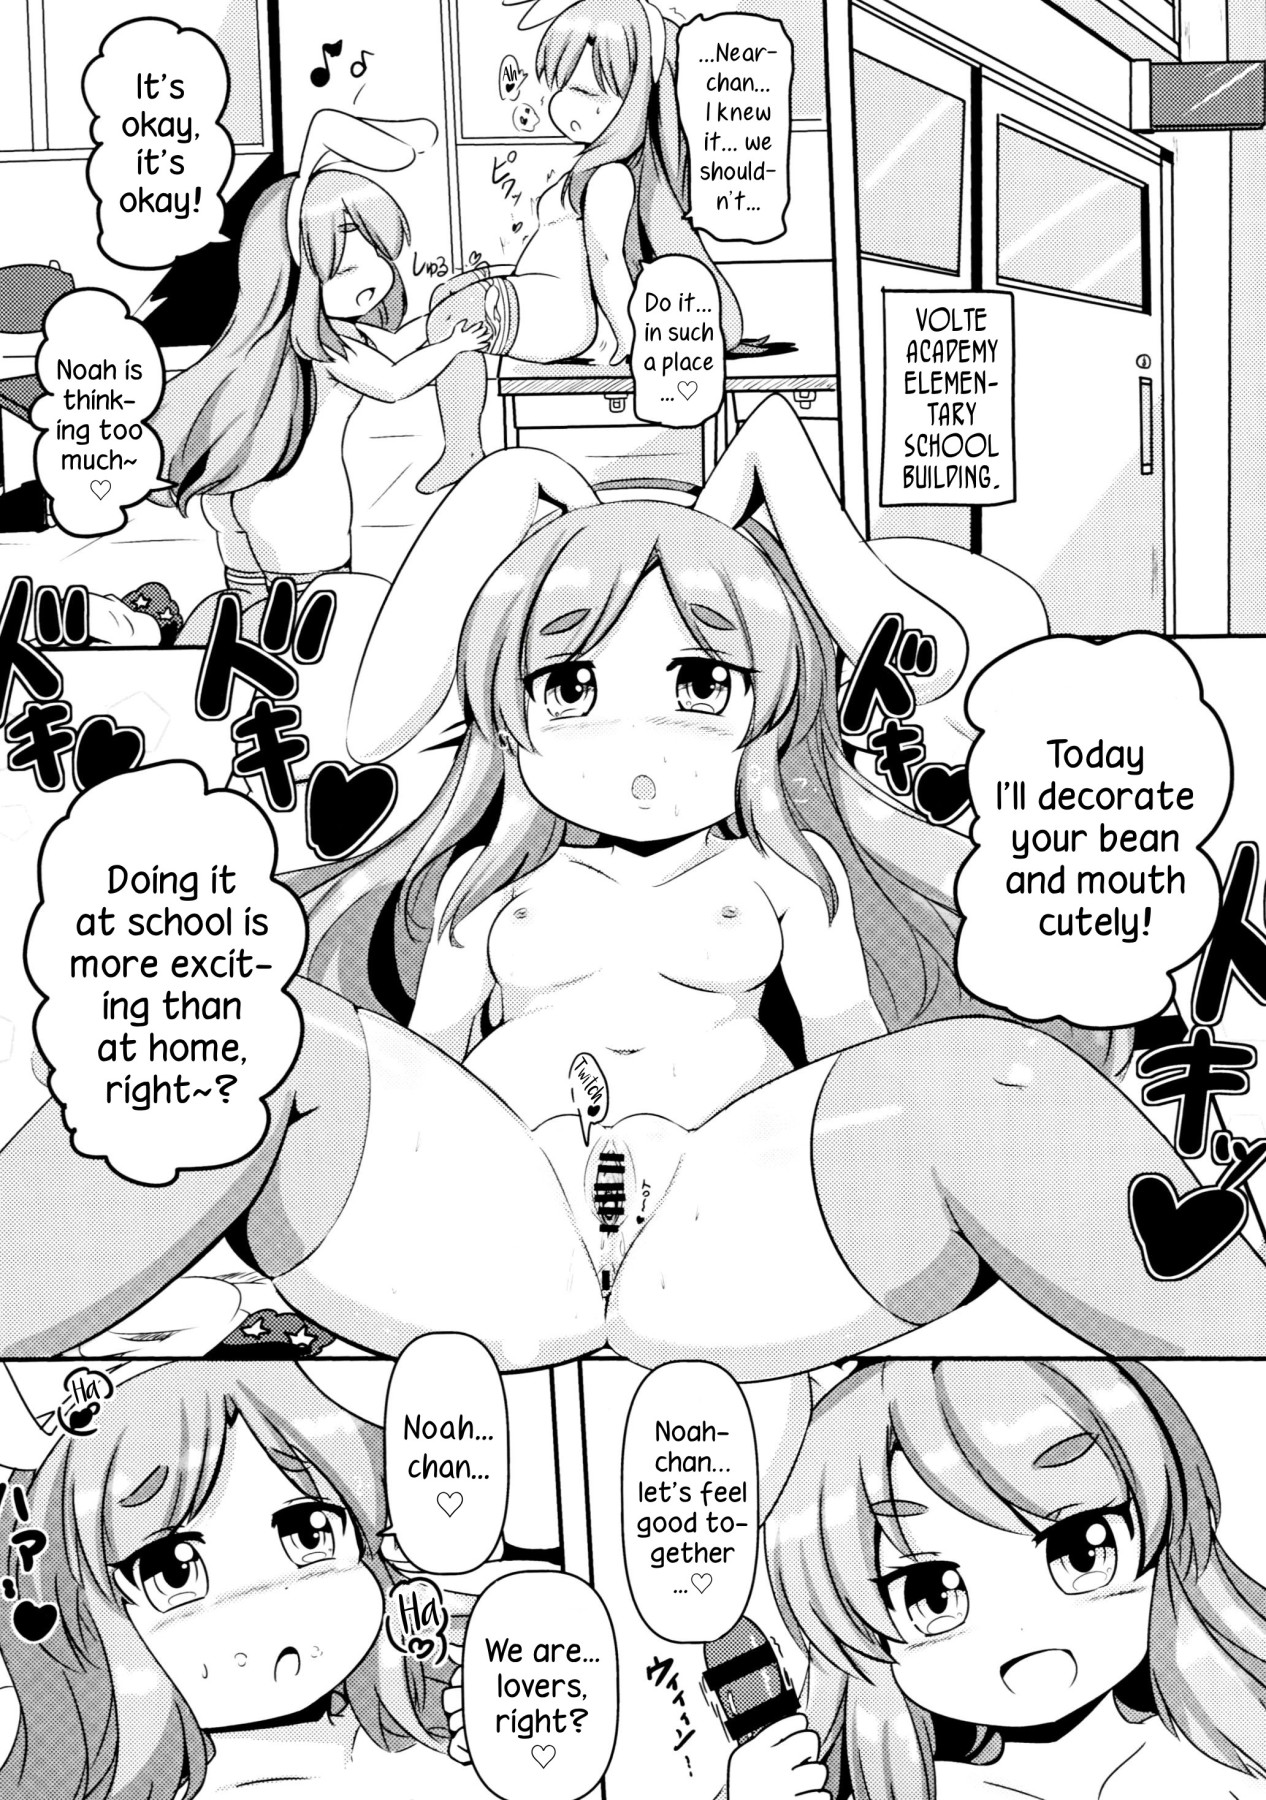 Hentai Manga Comic-Near and Noah Had a Good Relationship-Read-2